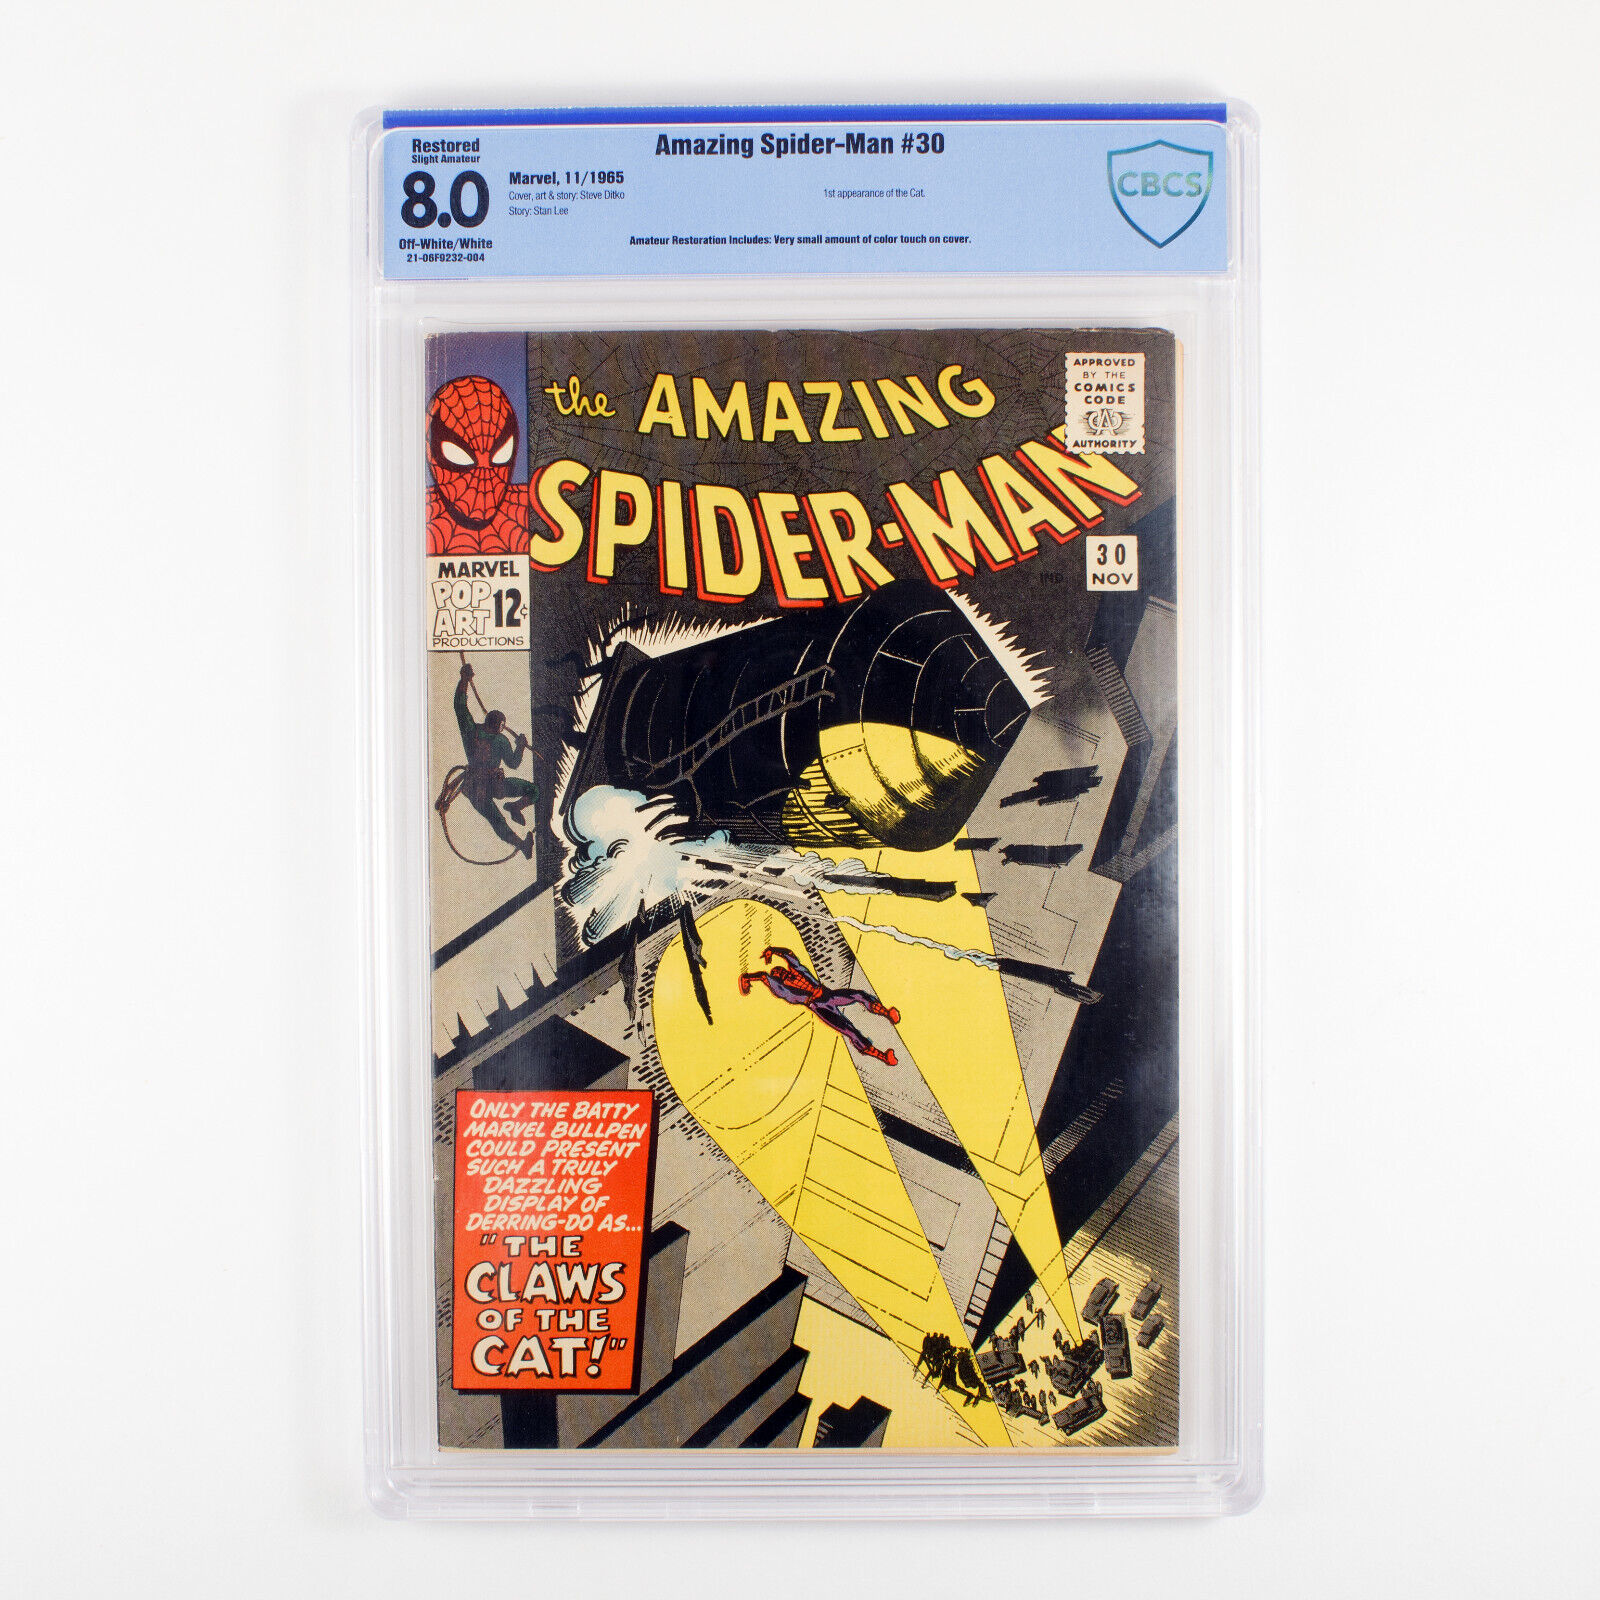 Amazing Spider-Man - #30 - CBCS 8.0 - Restored - OW-W - First App Cat Burglar